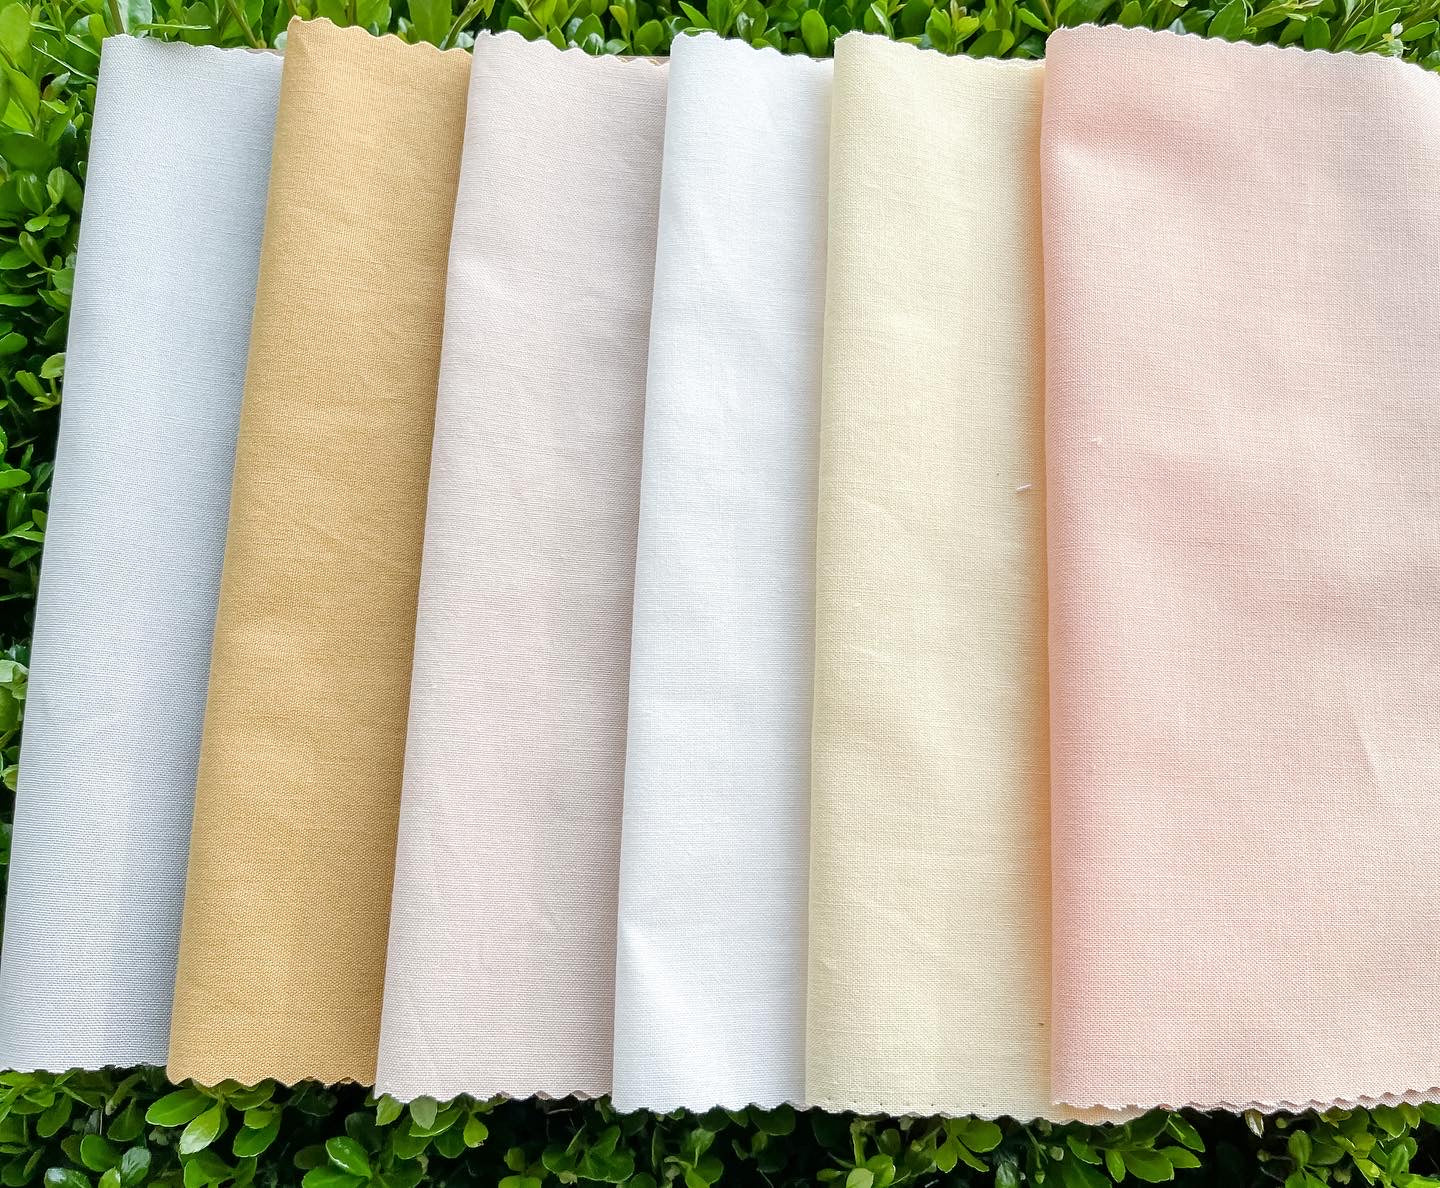 Embroidery Fabric Square Sample Packs - Kona Cotton Fabric, Linen Blend  Fabric, Fabric Squares